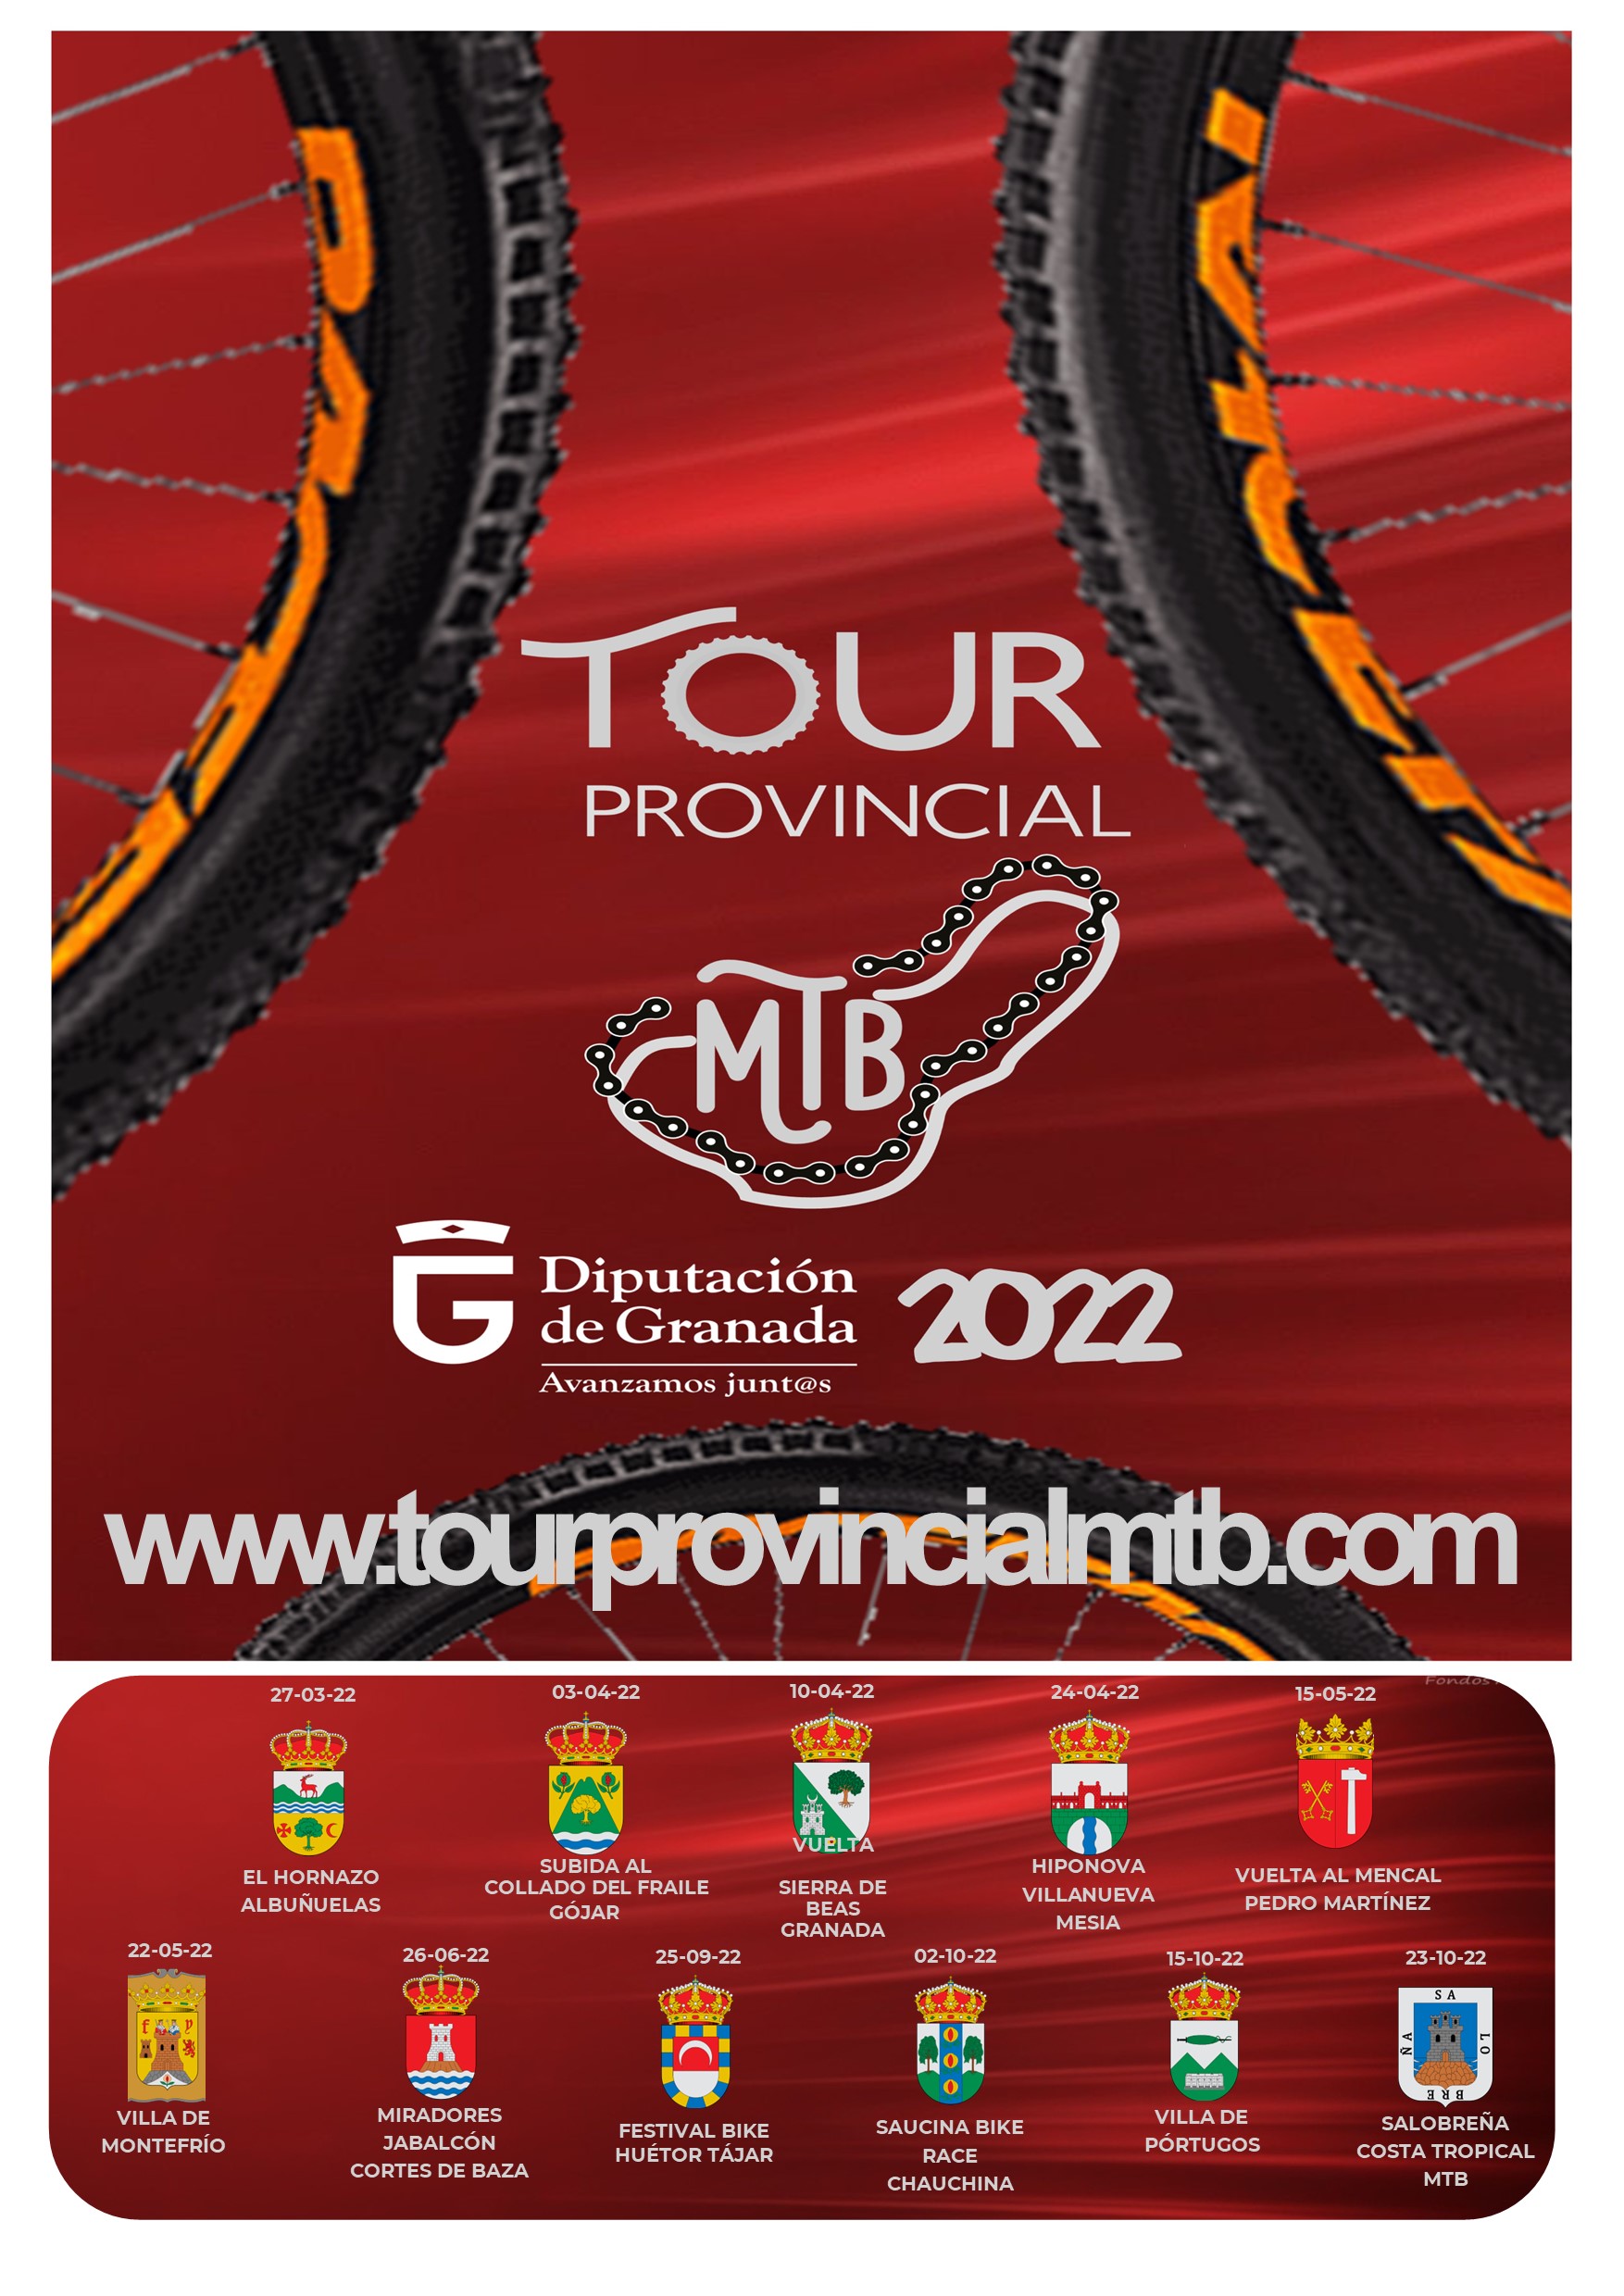 TOUR  PROVINCIALMTB 2022 - SAUCINA BIKE RACE